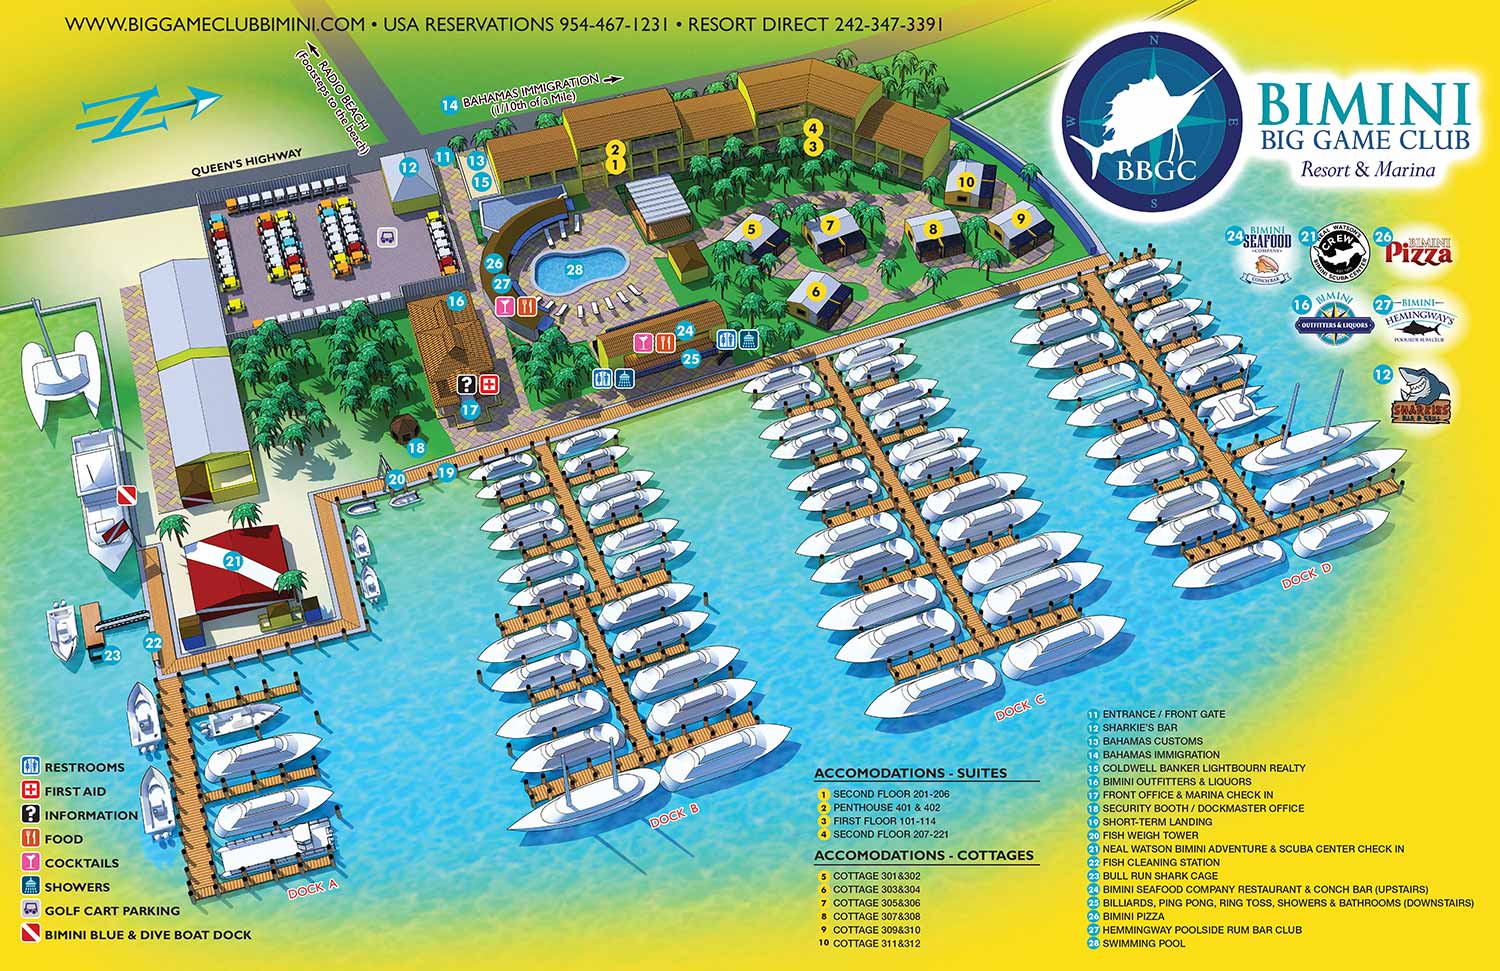 Bimini Big Game Club Resort and Marina Illustrated Map